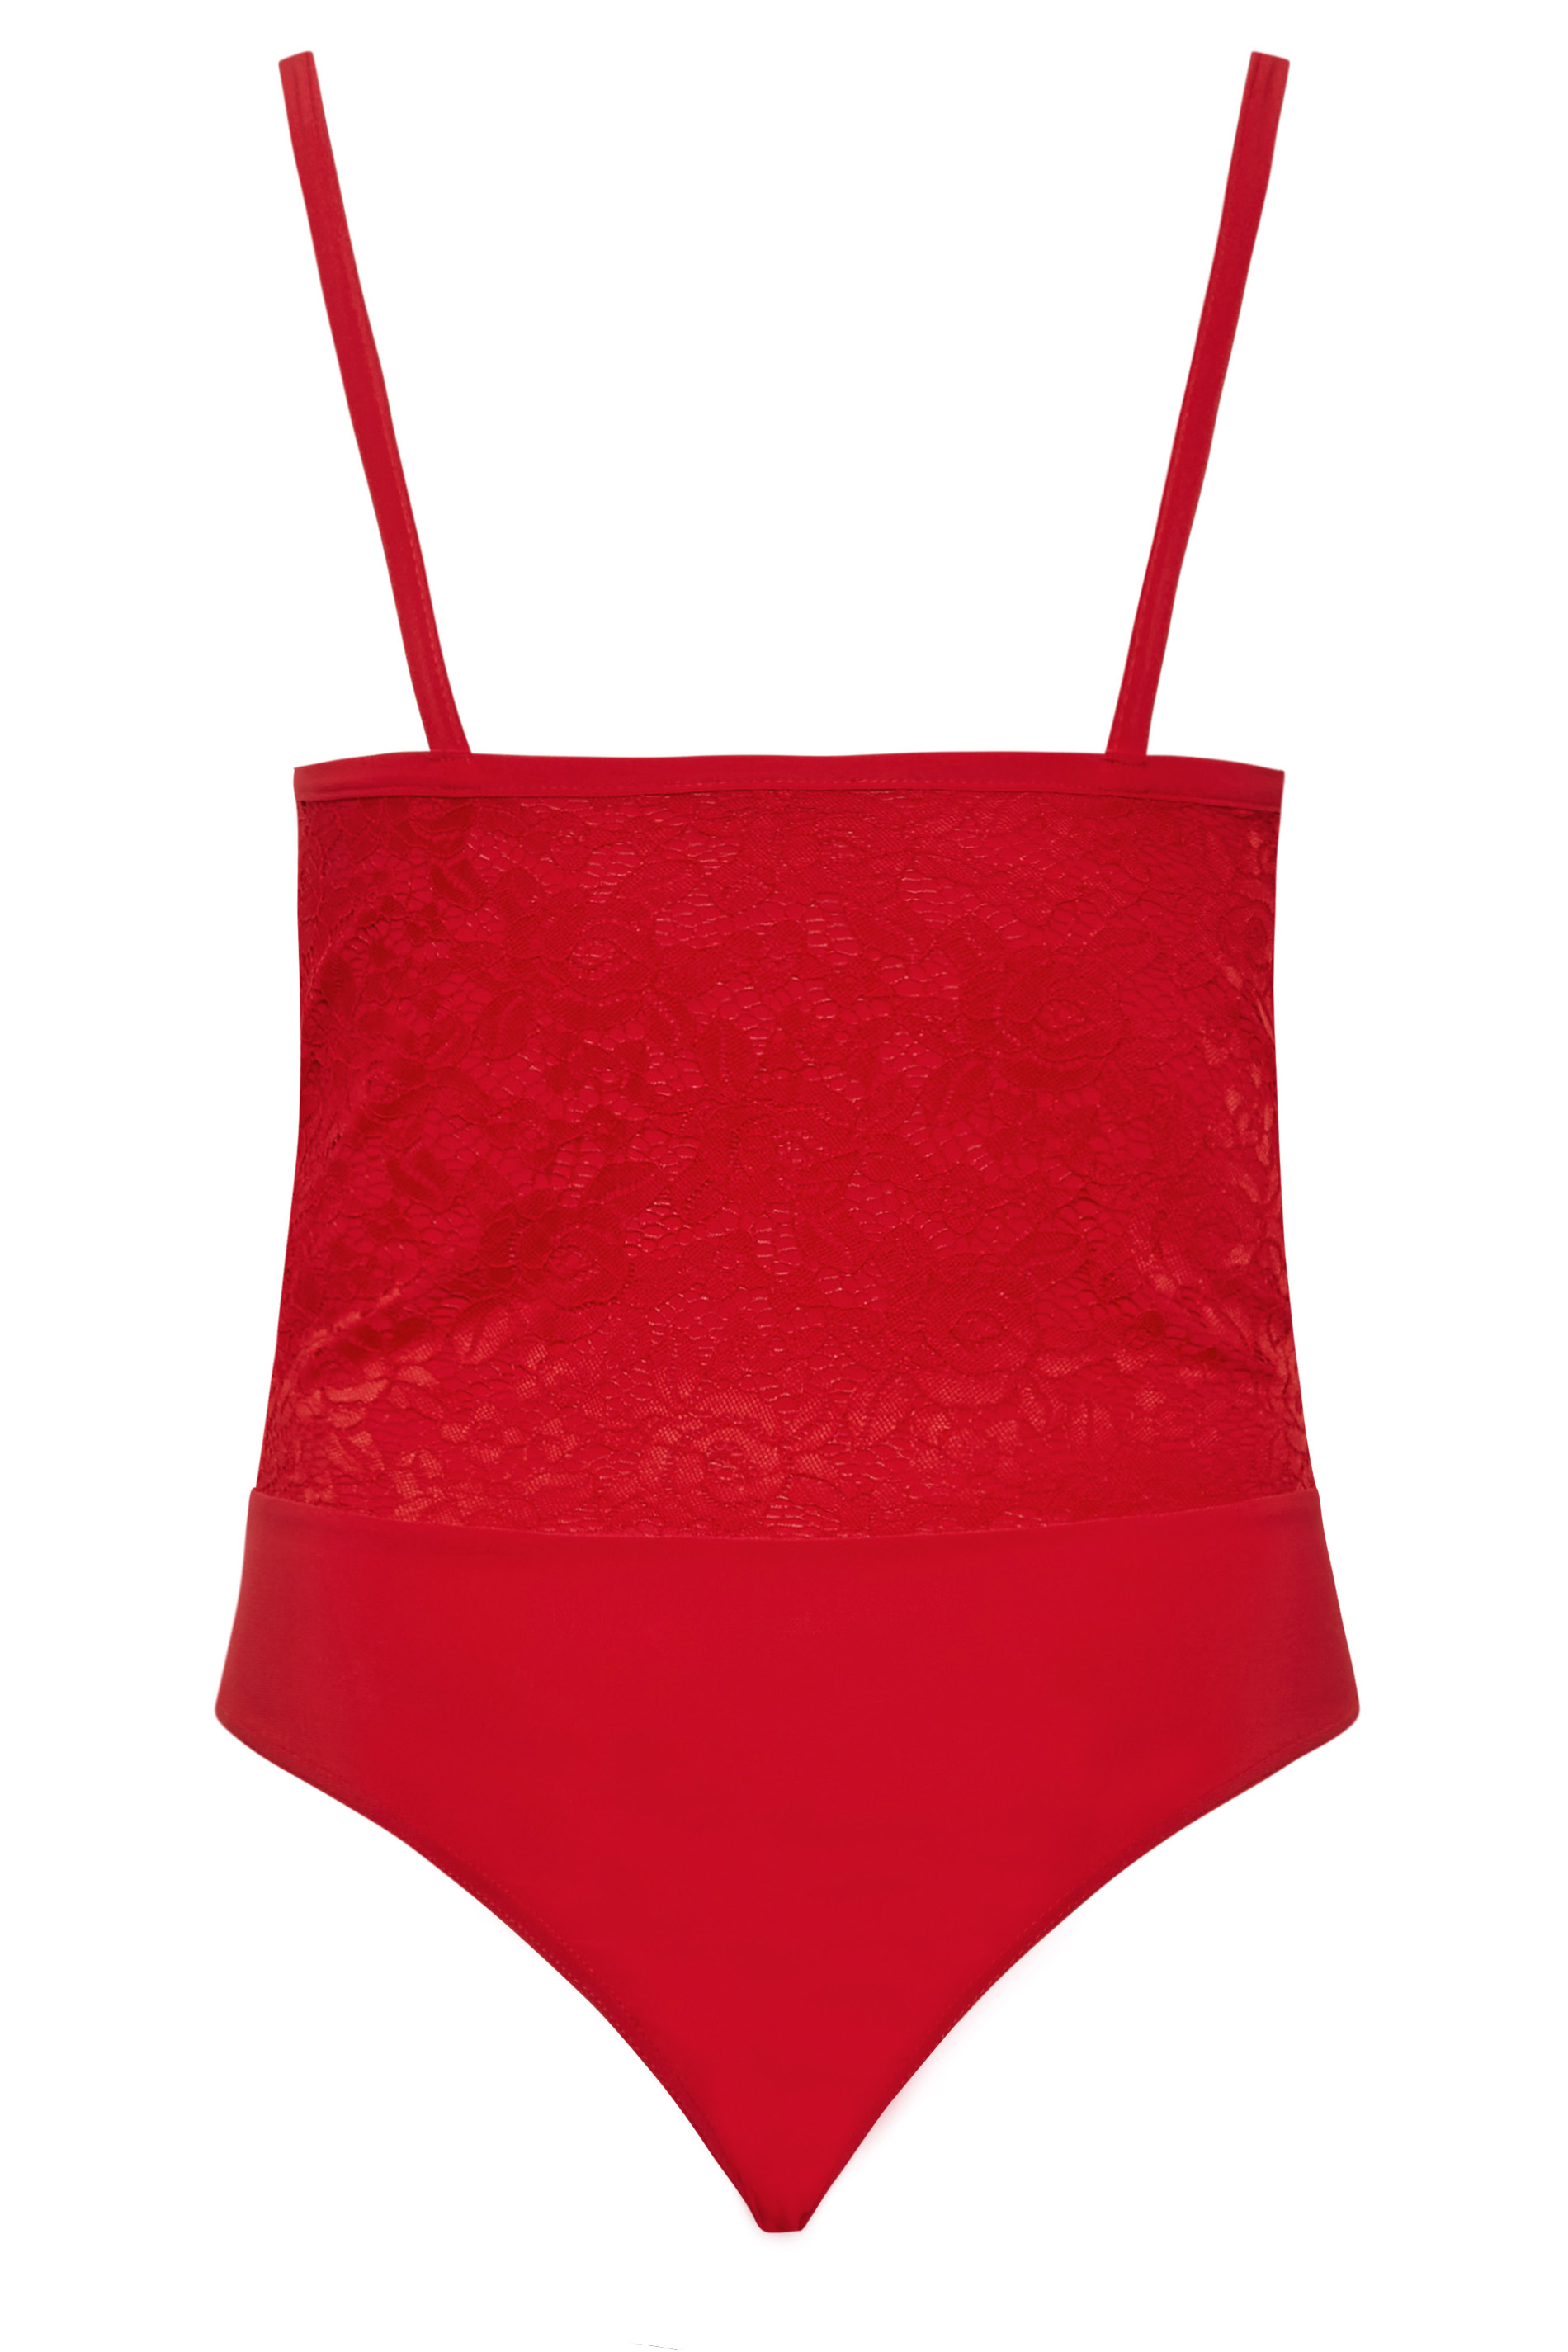 Women's Lace and Mesh Lingerie Bodysuit - Auden™ Red XS